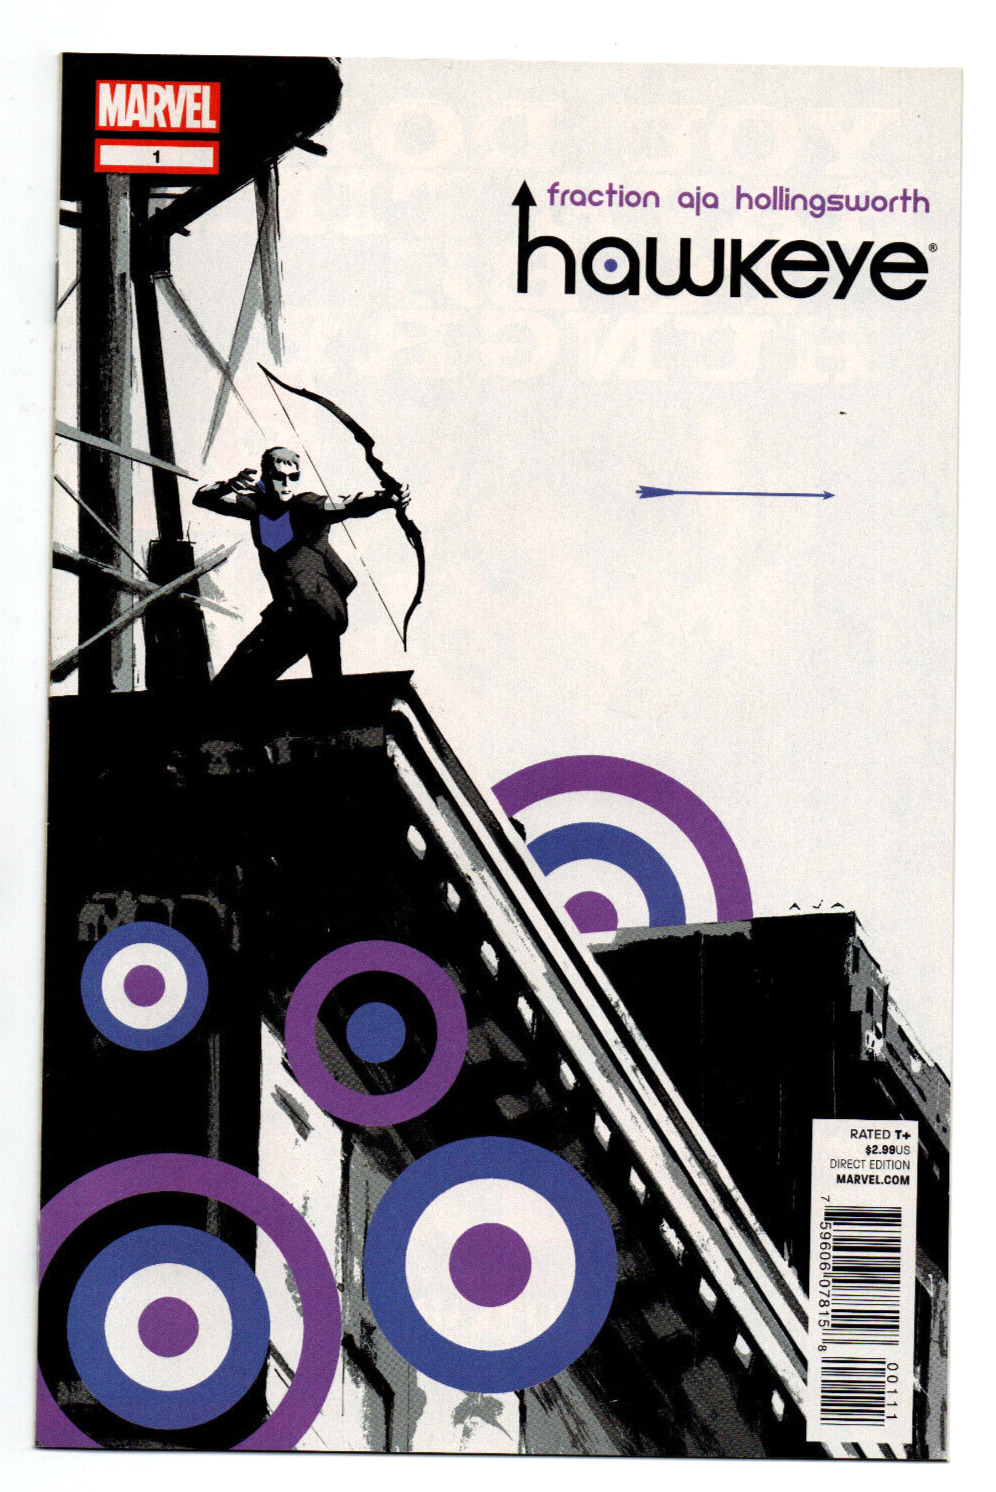 Hawkeye #1 - 1st Print - 1st Lucky Pizza Dog - KEY - Matt Fraction - 2012 - NM